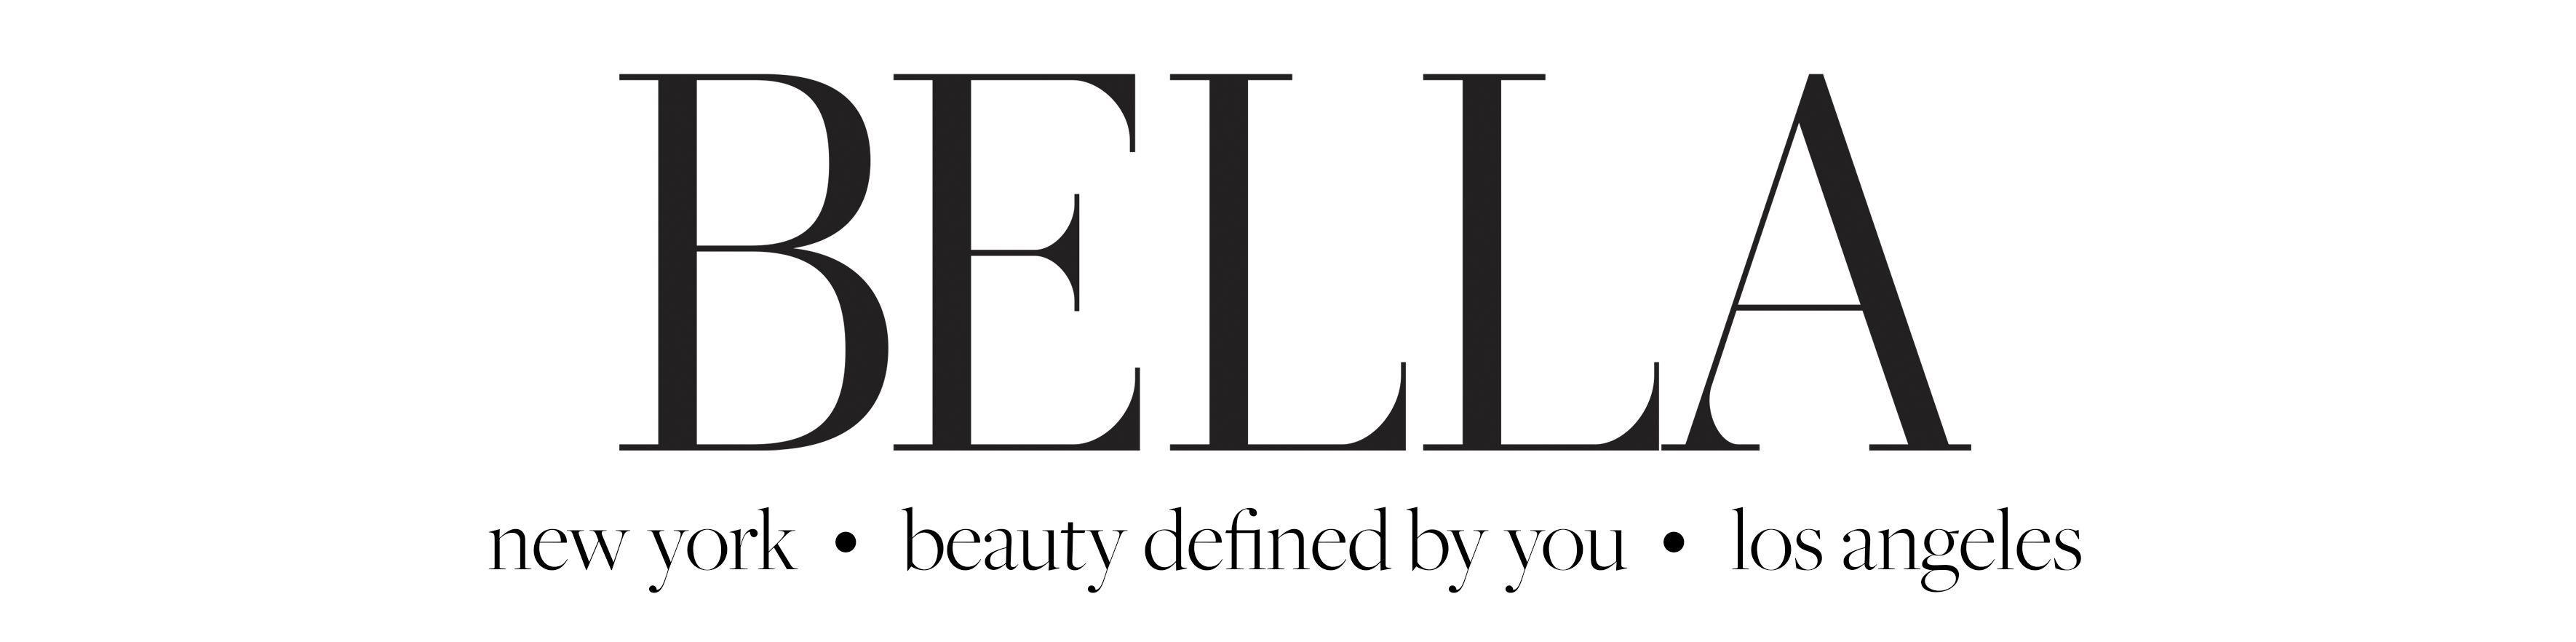 New York Magazine Logo - BELLA New York Magazine- Beauty Defined by You!